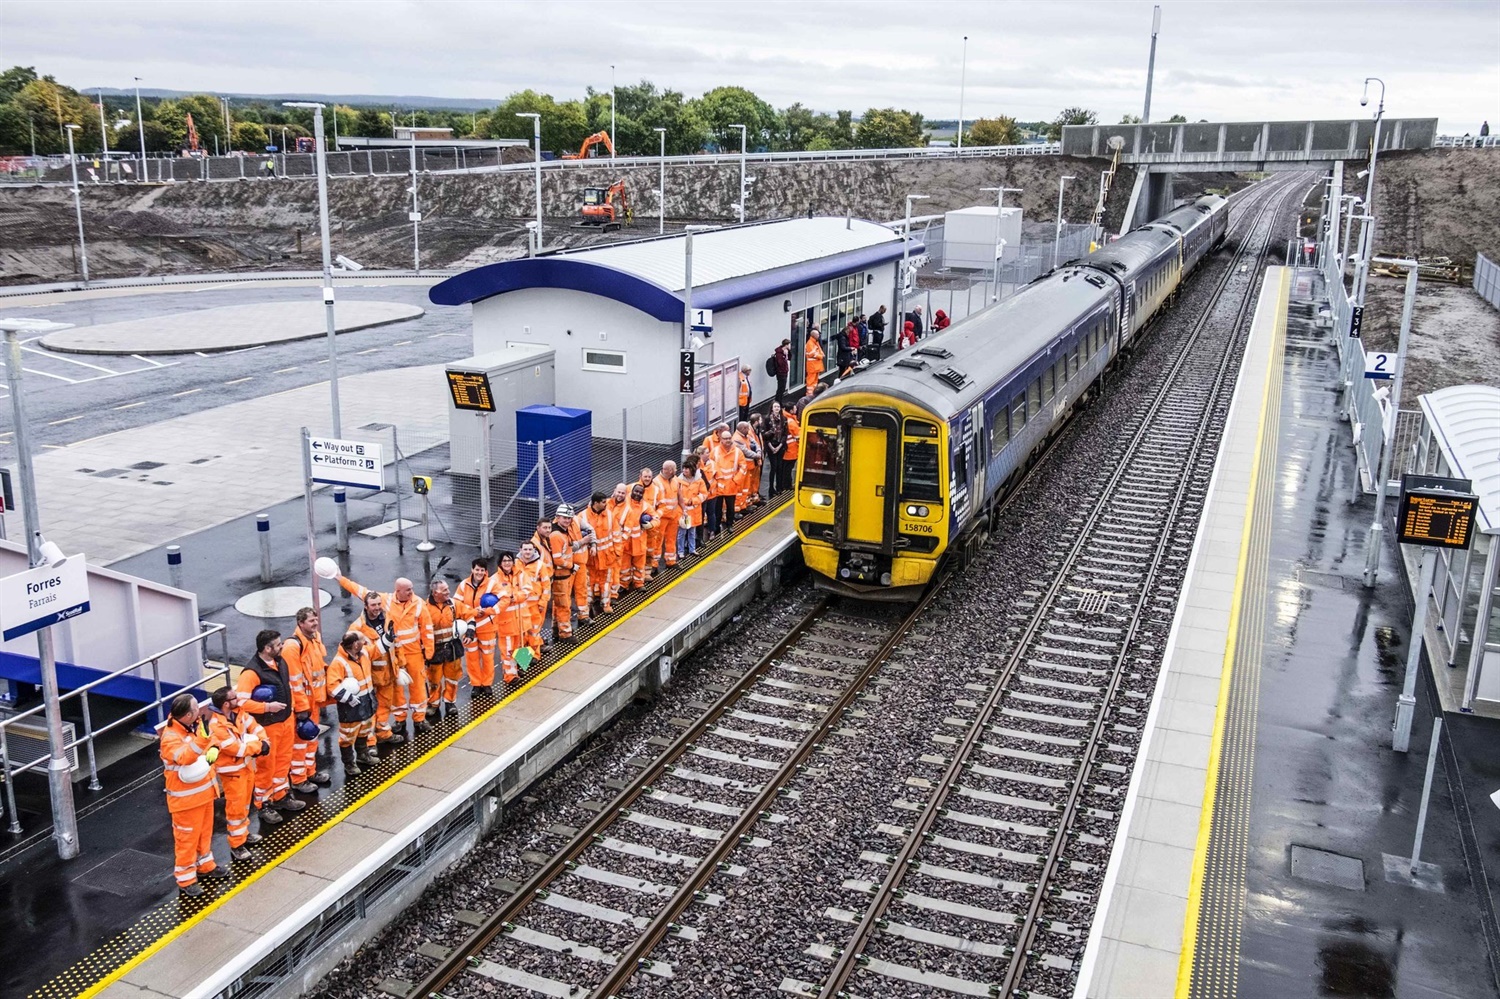 Forres station to ‘transform’ Scottish rail travel